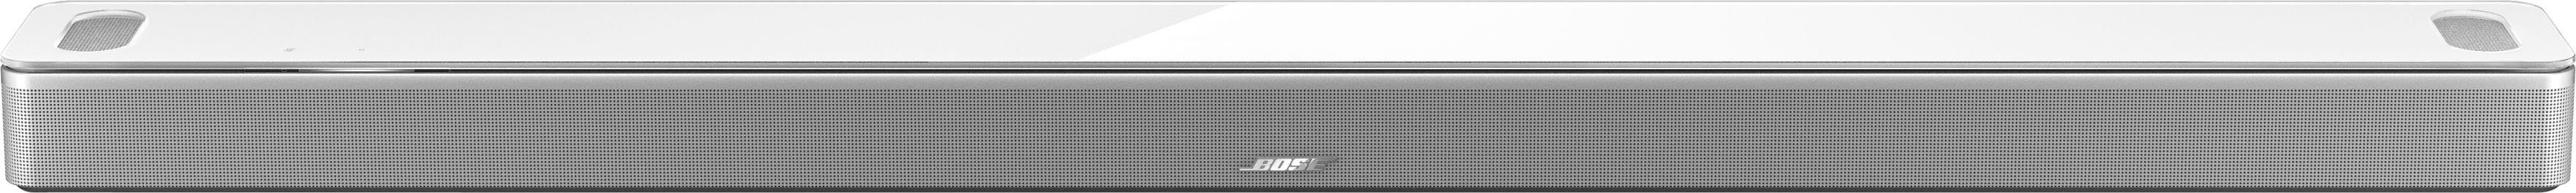 Assistant) Soundbar + Alexa 900 Bass Google Module mit Bose (Ethernet), Amazon weiss Soundbar und (Bluetooth, Smart LAN 700